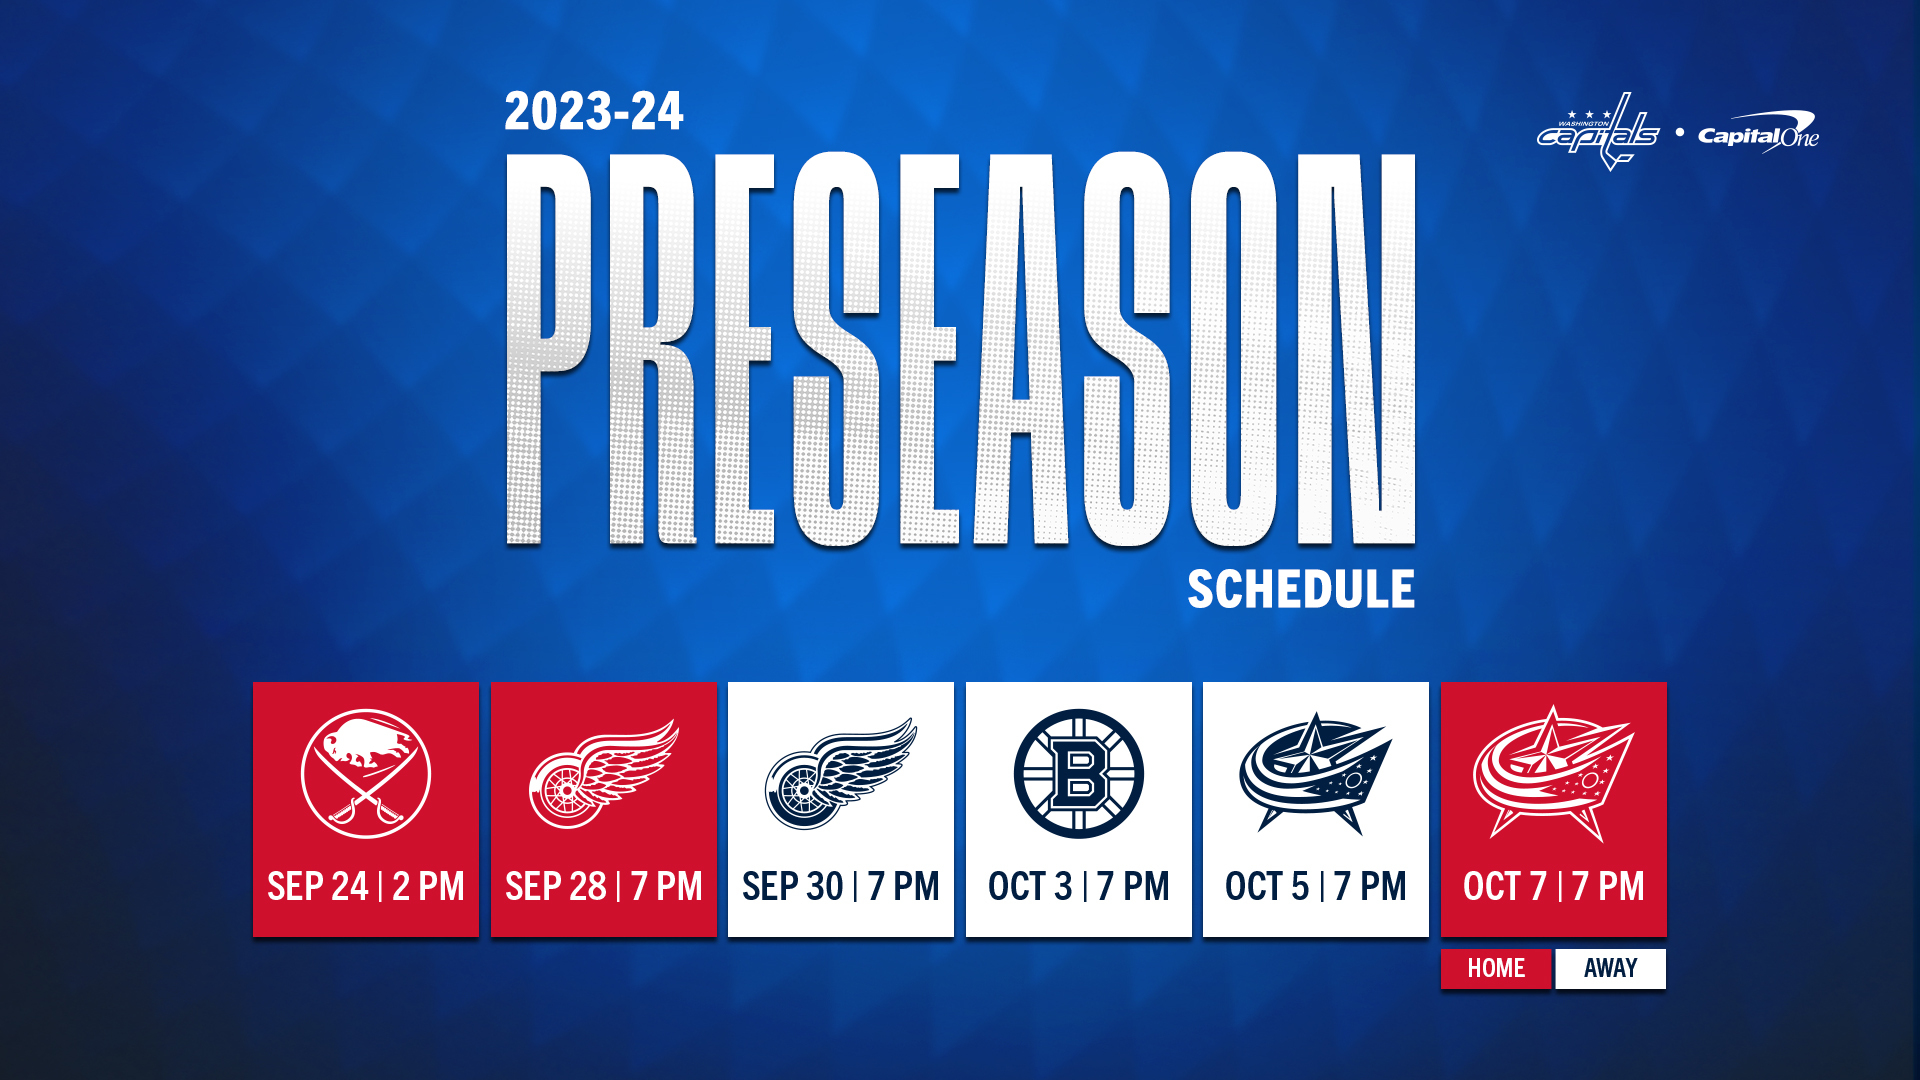 Tampa Bay Lightning announce 2022 preseason schedule 